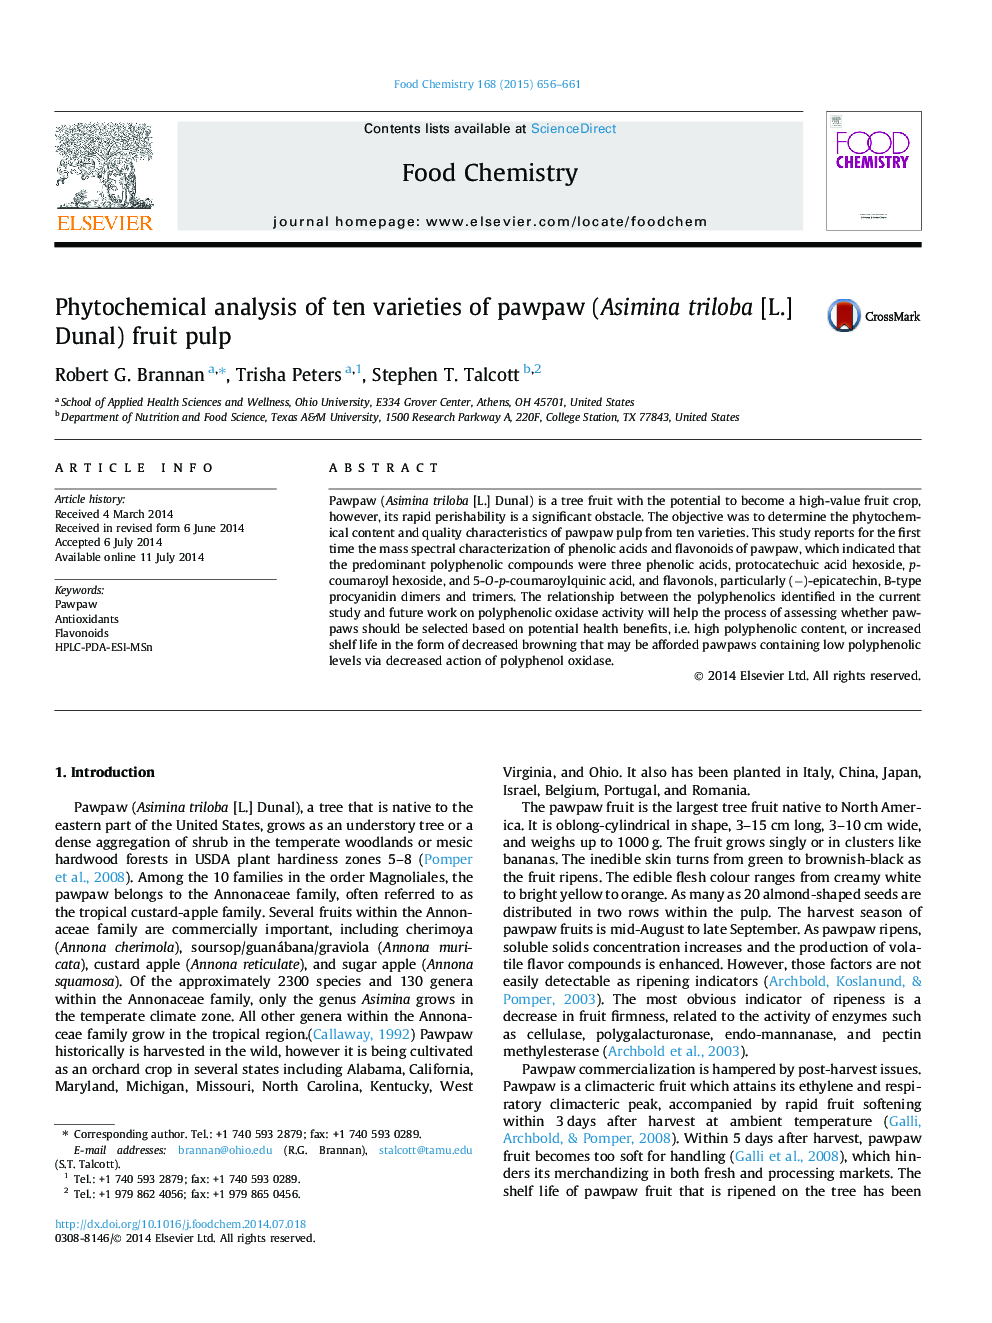 Phytochemical analysis of ten varieties of pawpaw (Asimina triloba [L.] Dunal) fruit pulp